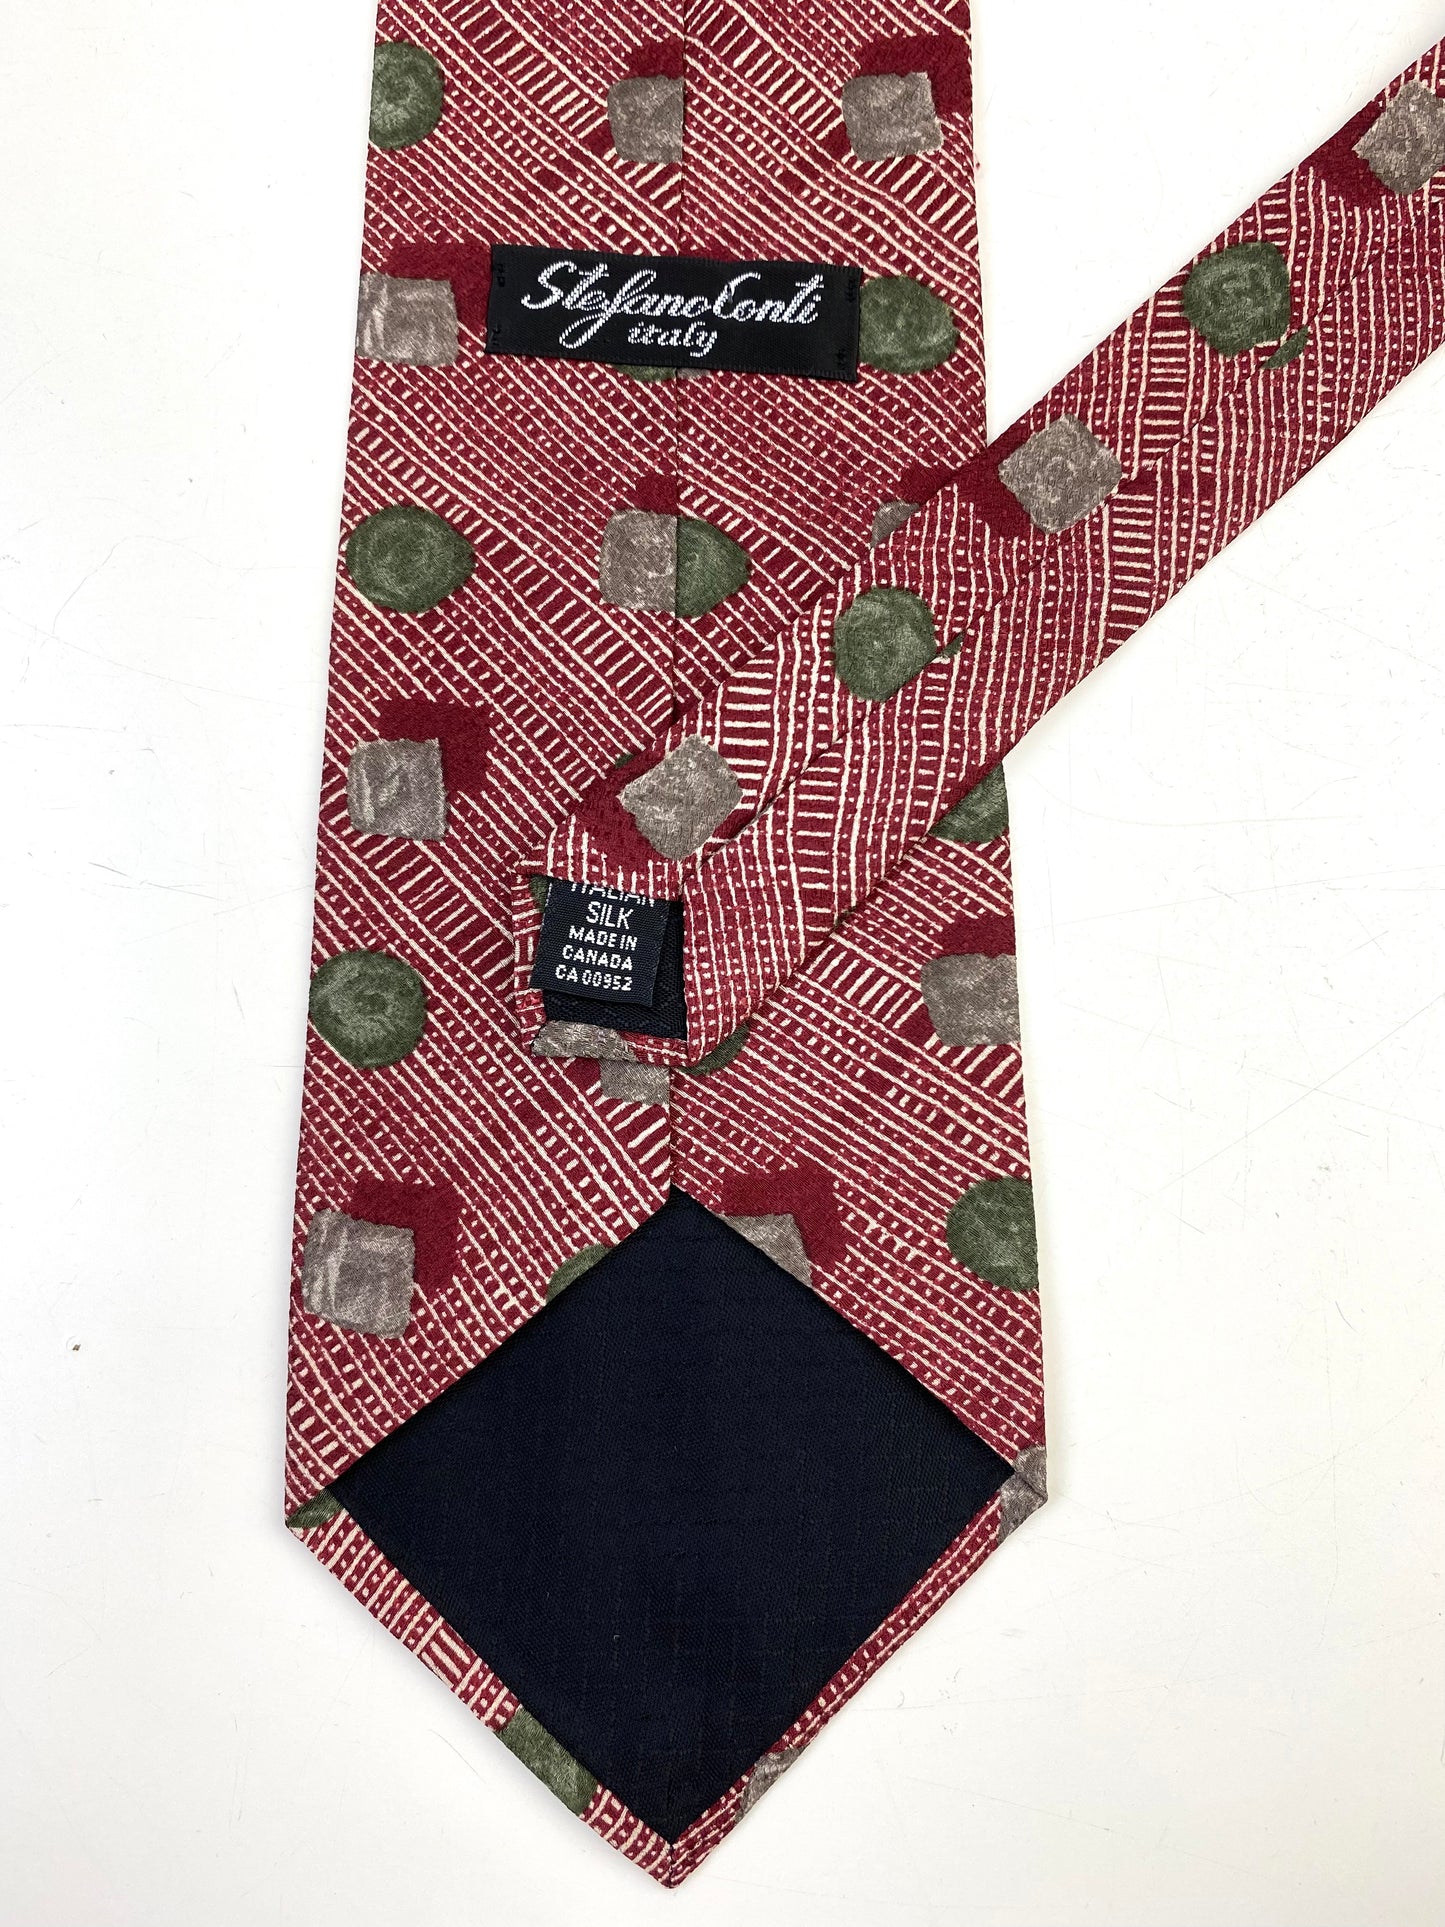 90s Deadstock Silk Necktie, Men's Vintage Wine/ Green/ Grey Square Dot Pattern Tie, NOS